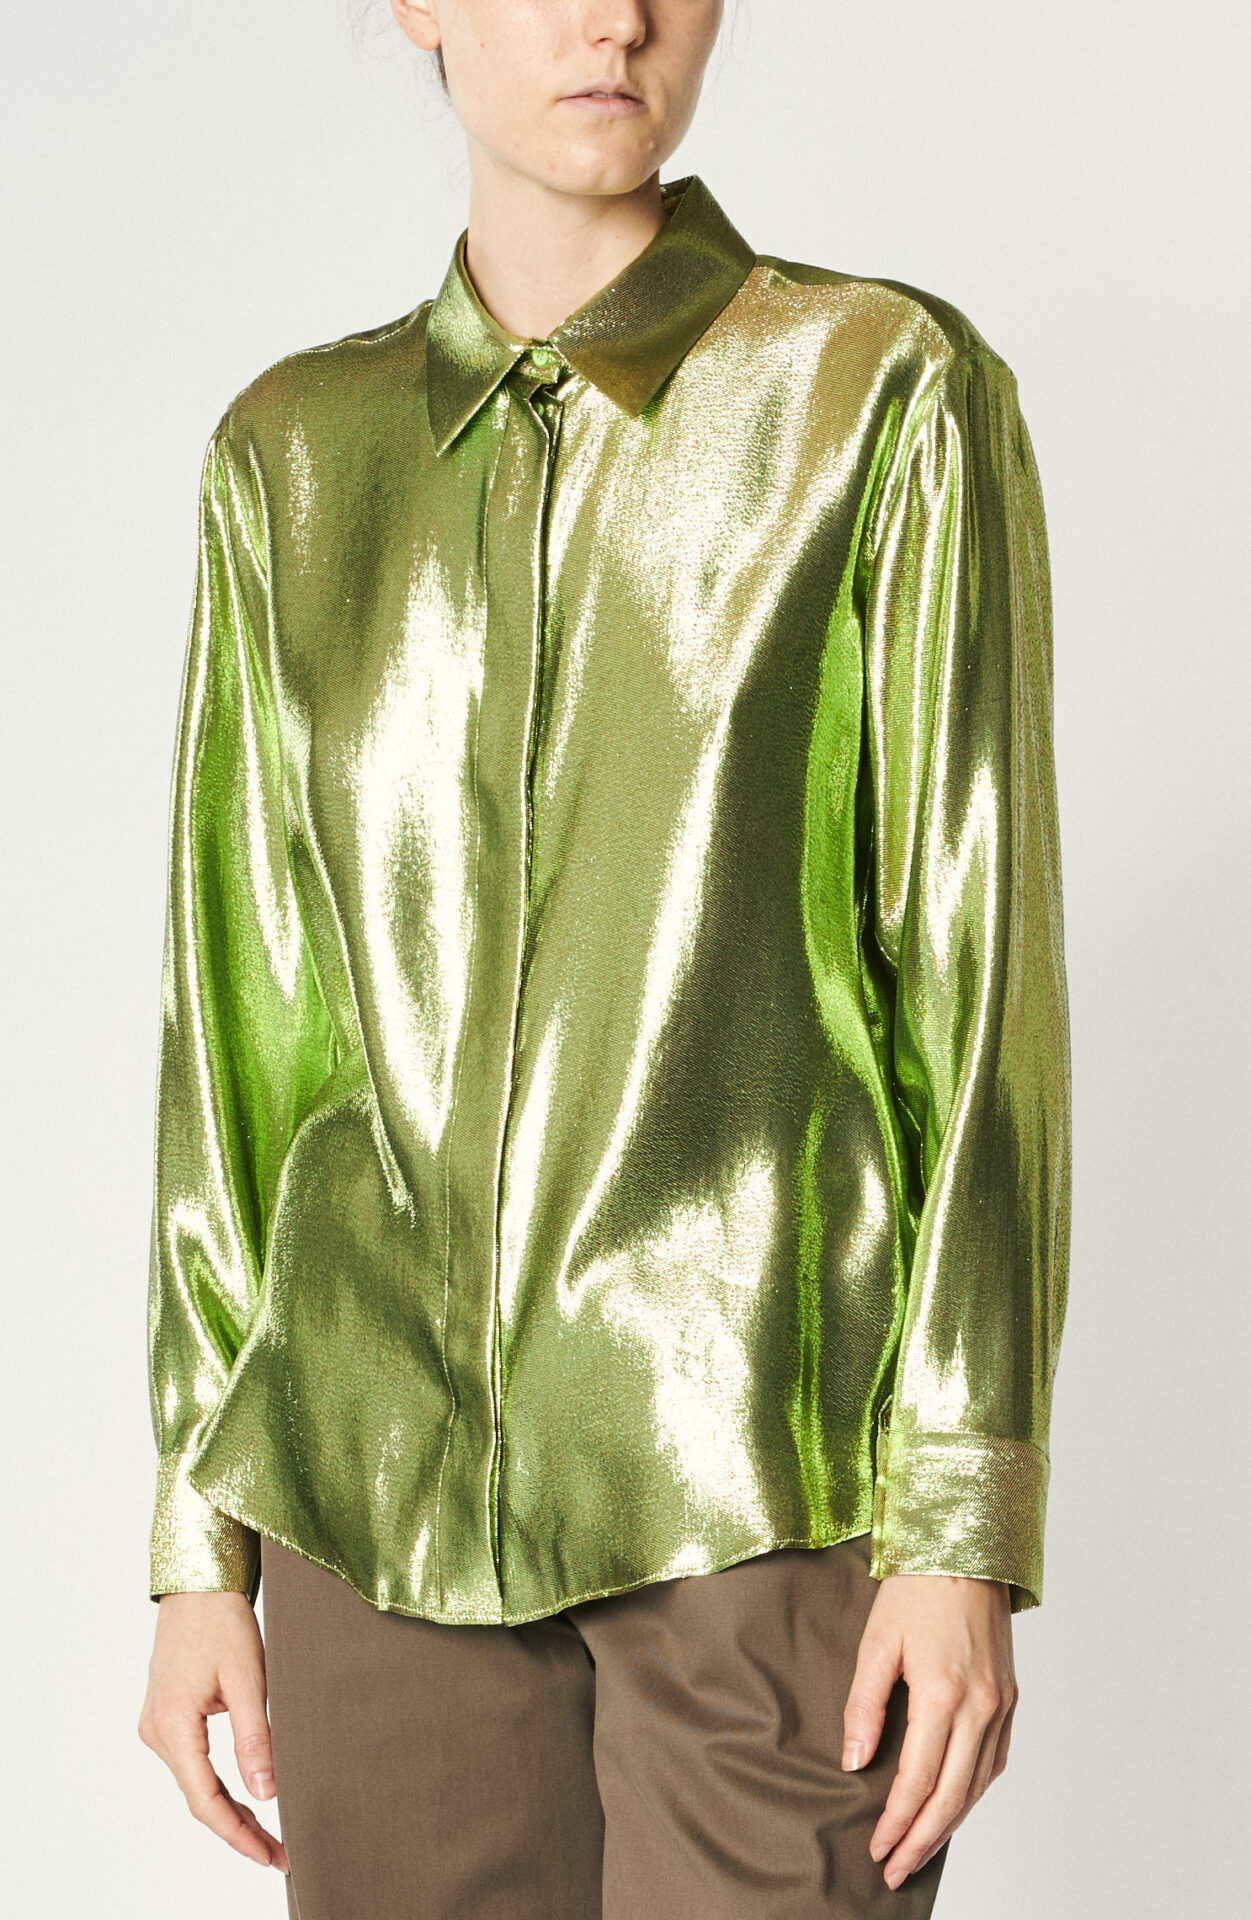 Indress - Lurex silk blouse Dos Porcos" in light green